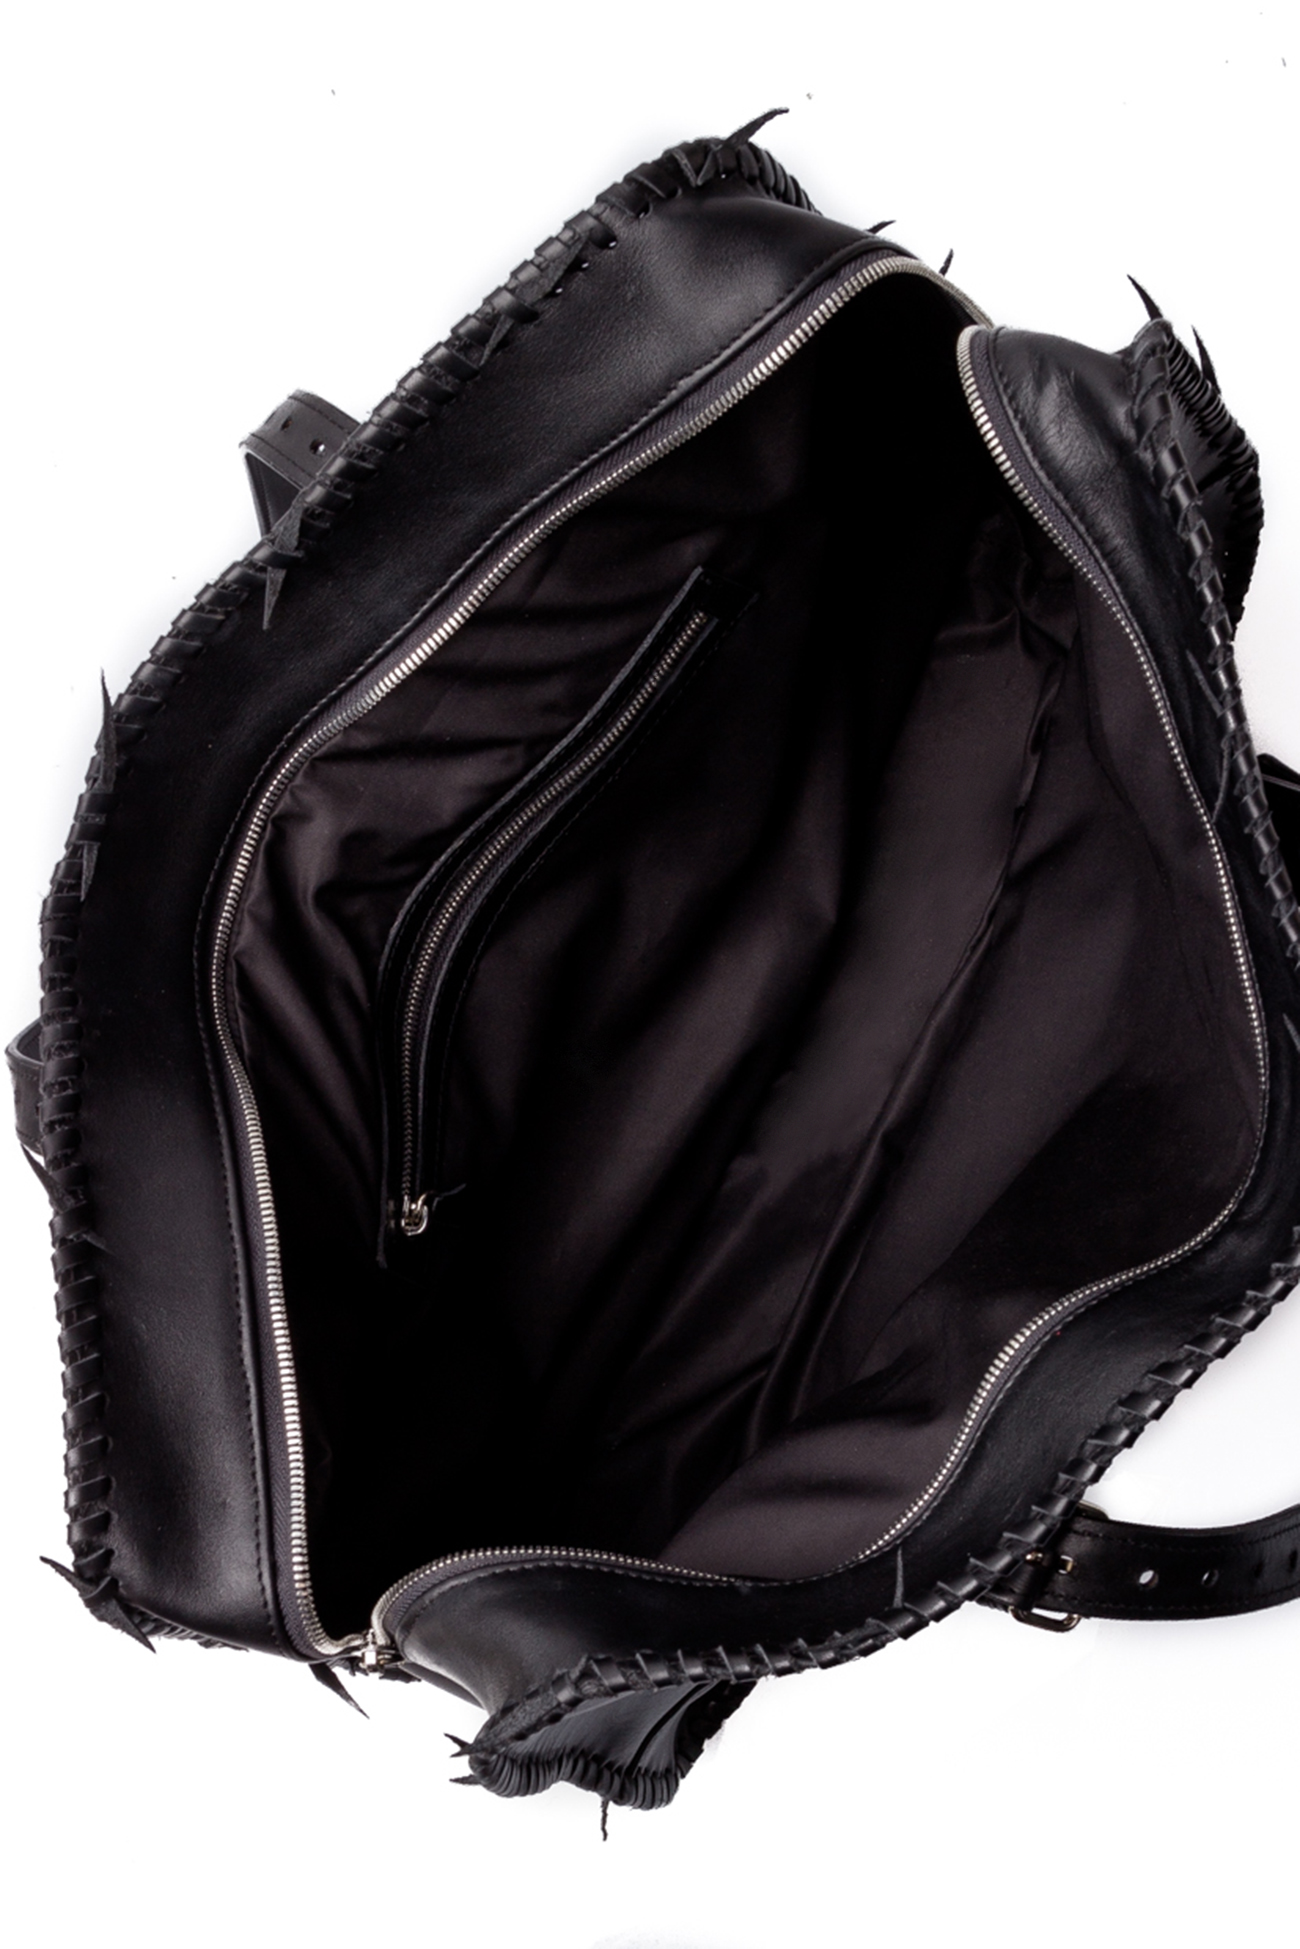 Woven black bag for man Anca Irina Lefter image 3